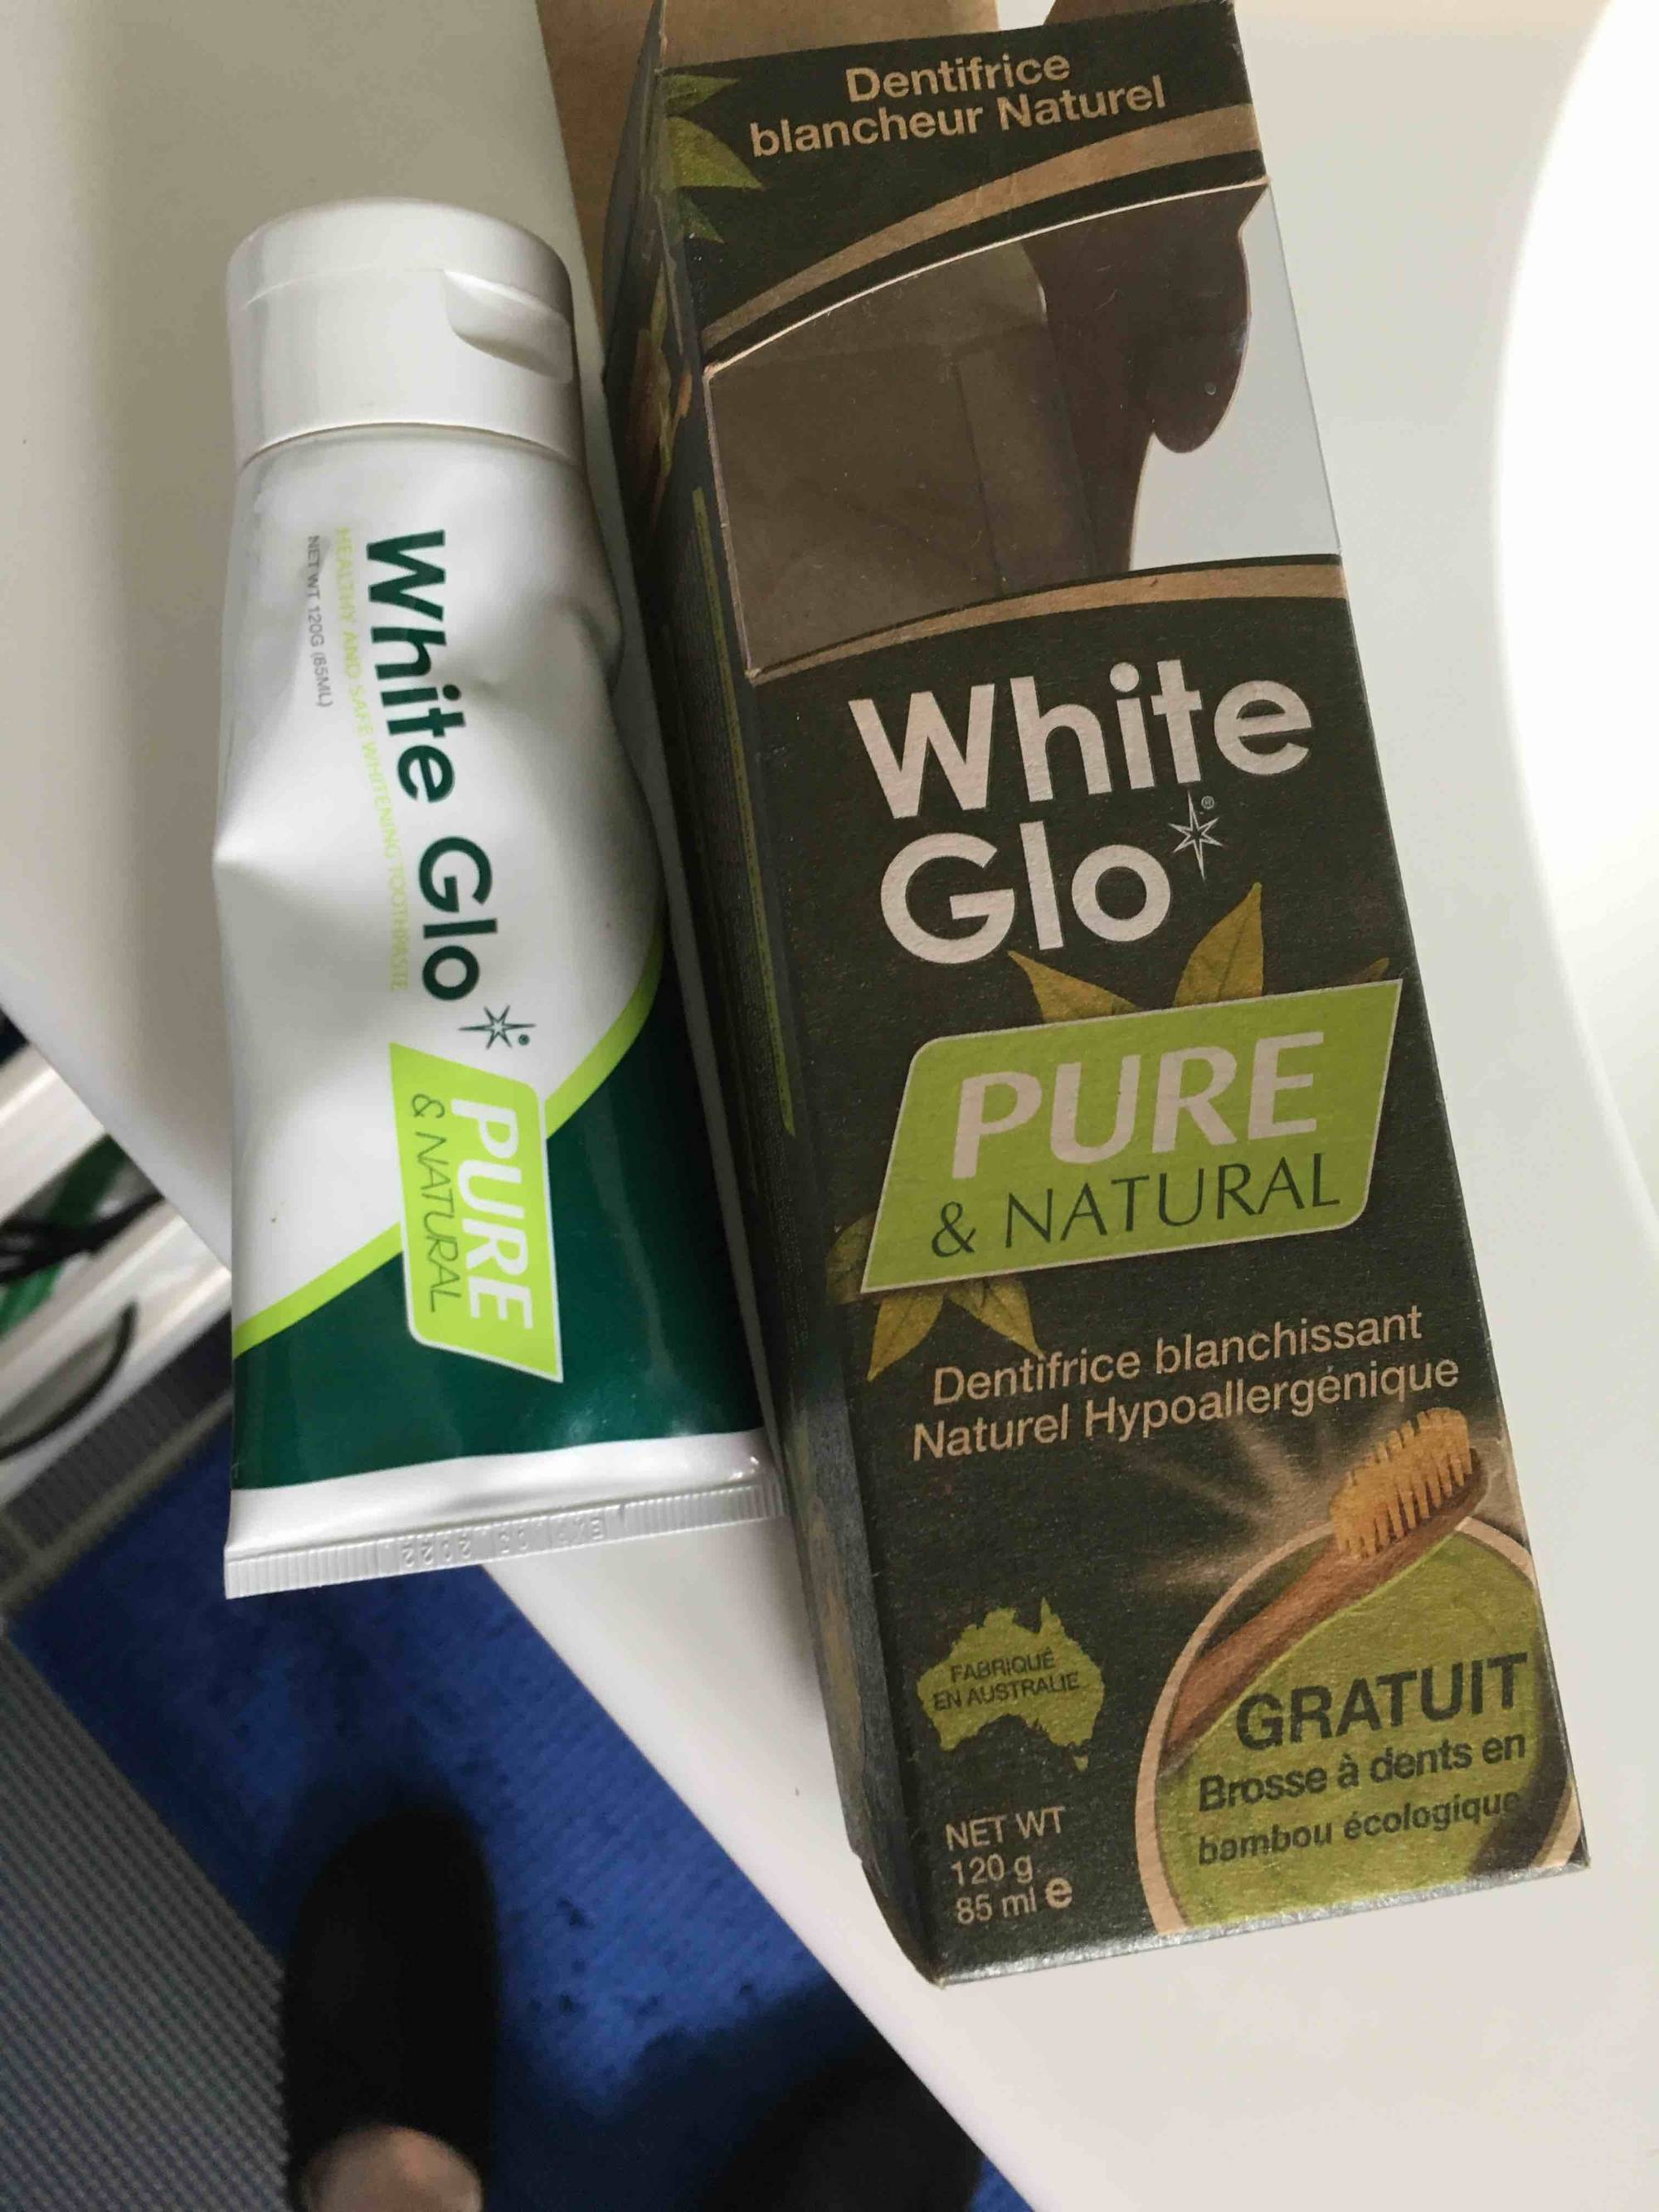 WHITE GLO - Pure & Natural - Dentifrice blanchissant 